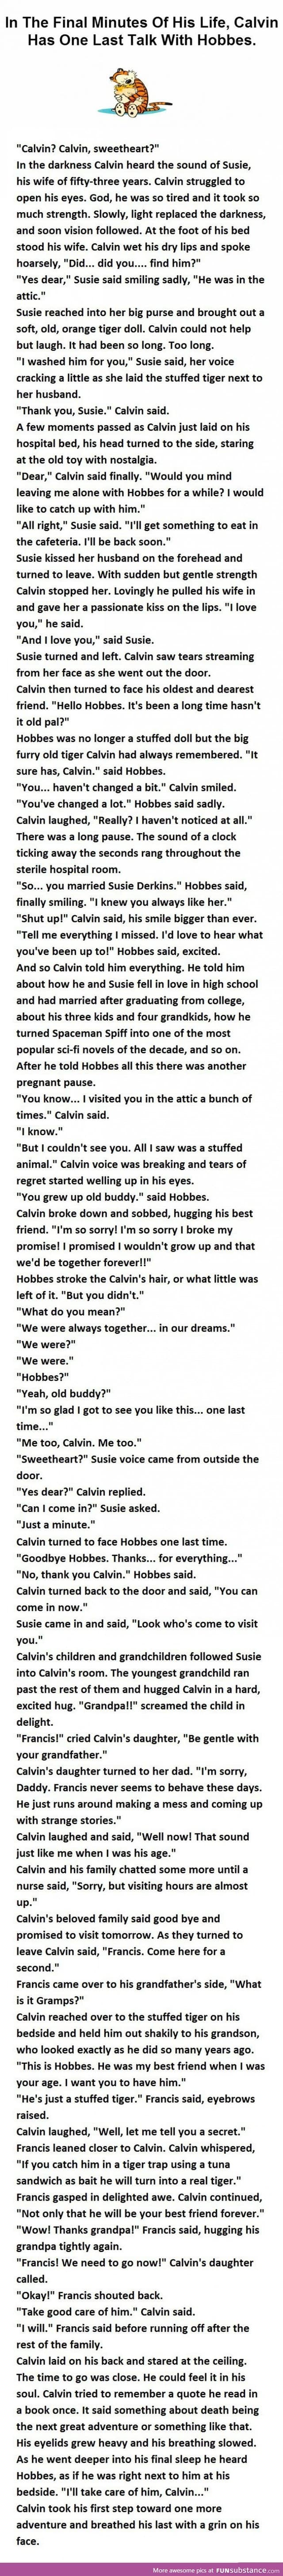 Calvin and Hobbes...It's Beautiful